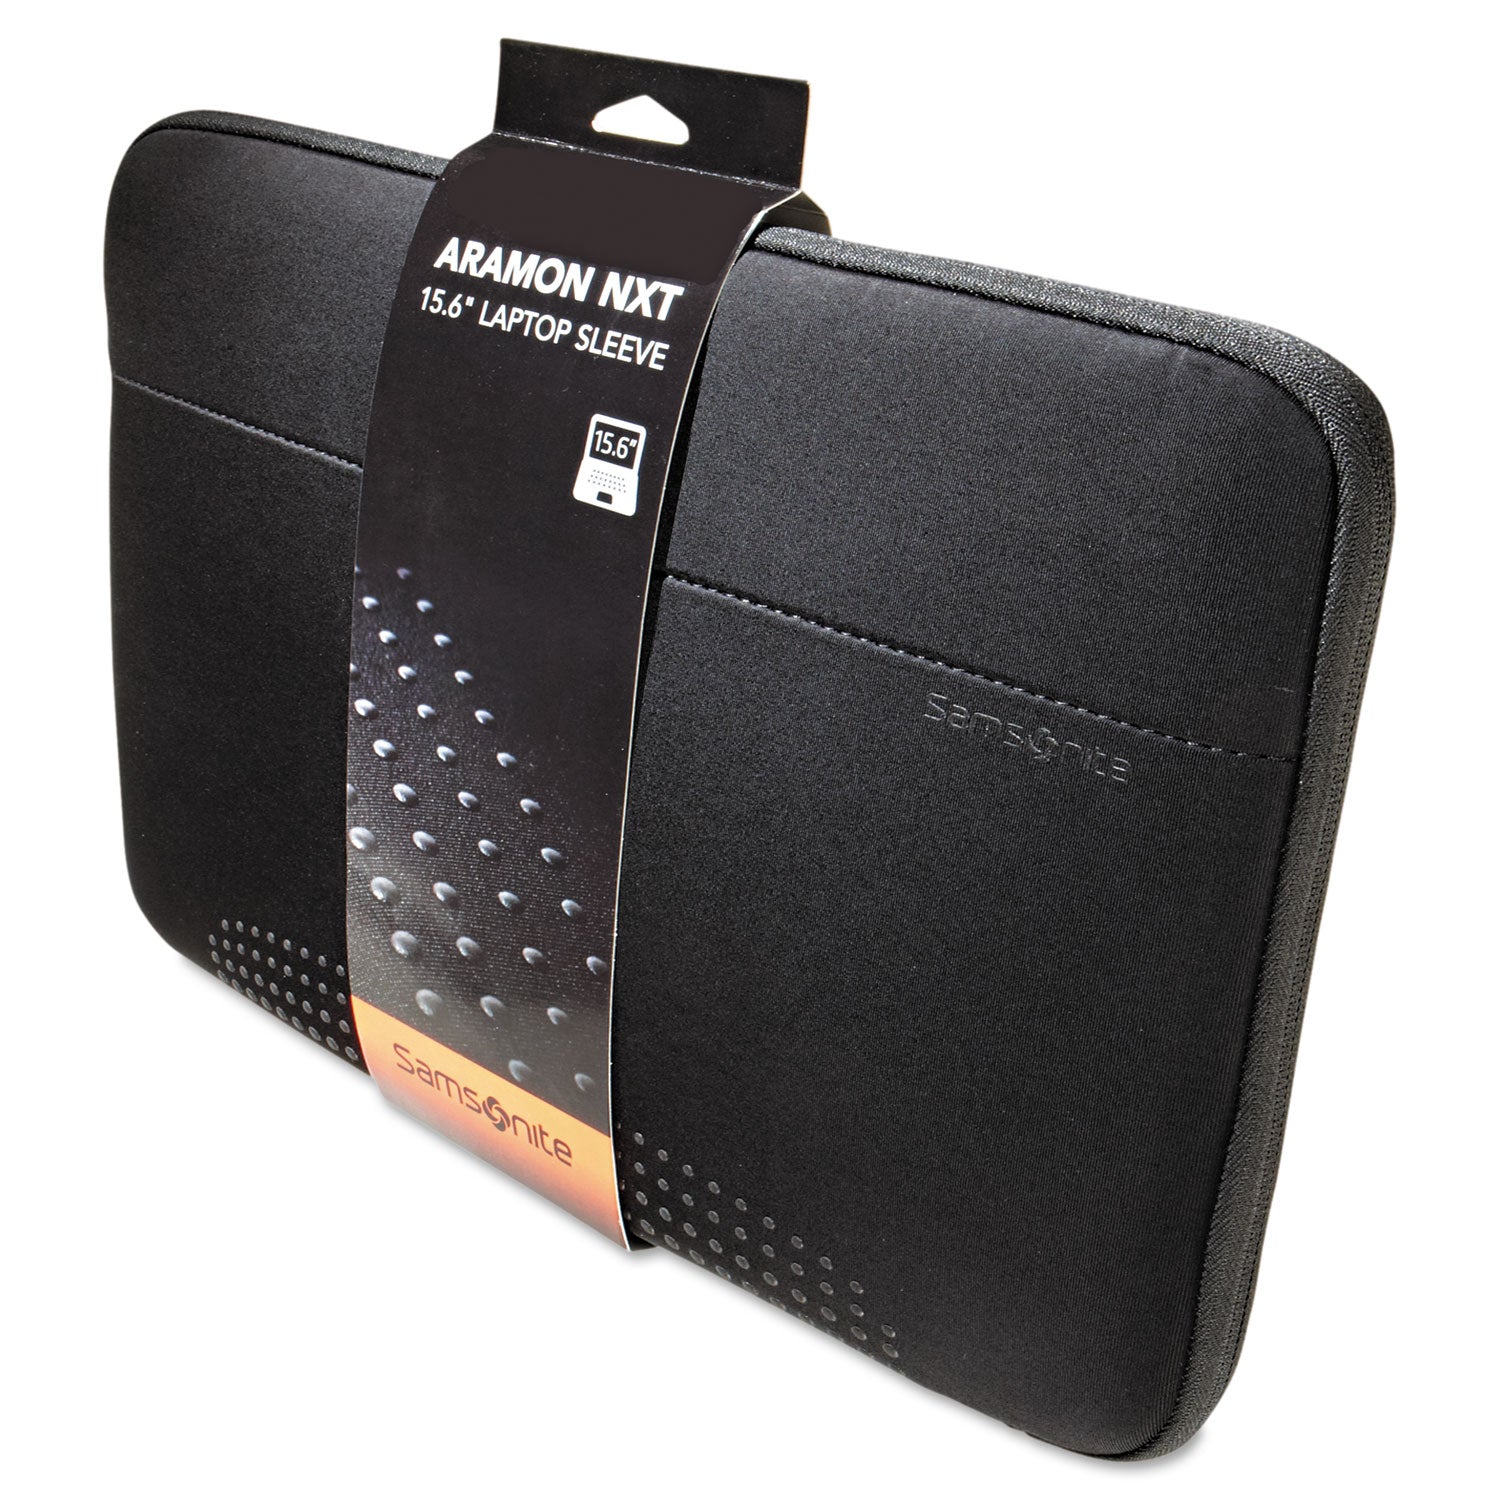 aramon-laptop-sleeve-fits-devices-up-to-156-neoprene-1575-x-1-x-105-black_sml433211041 - 2